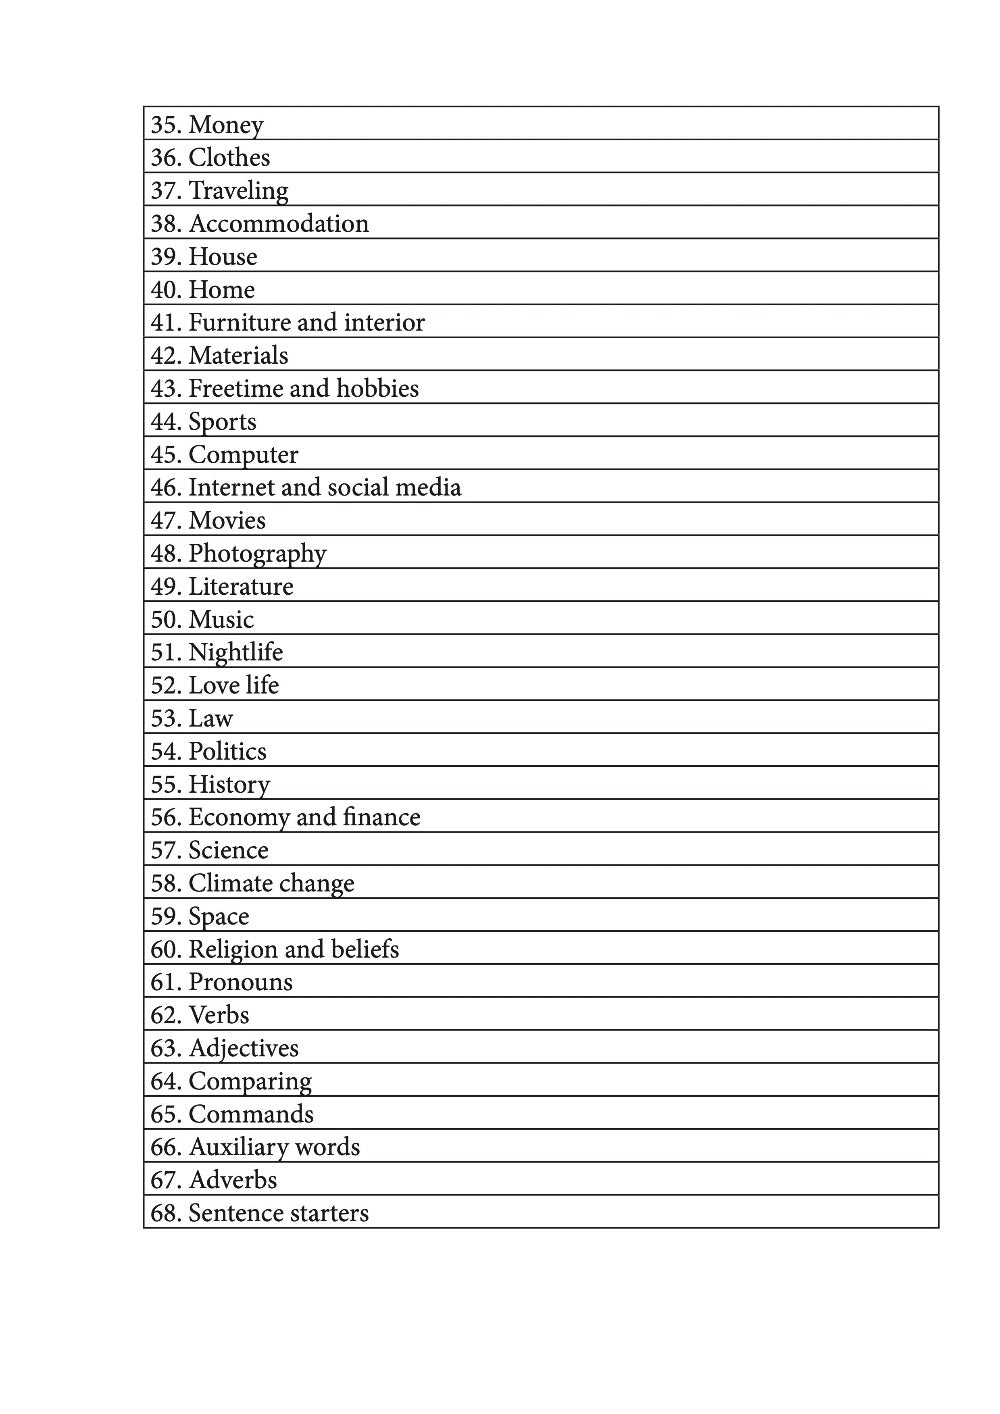 Limbu language learning notebook contents page 2